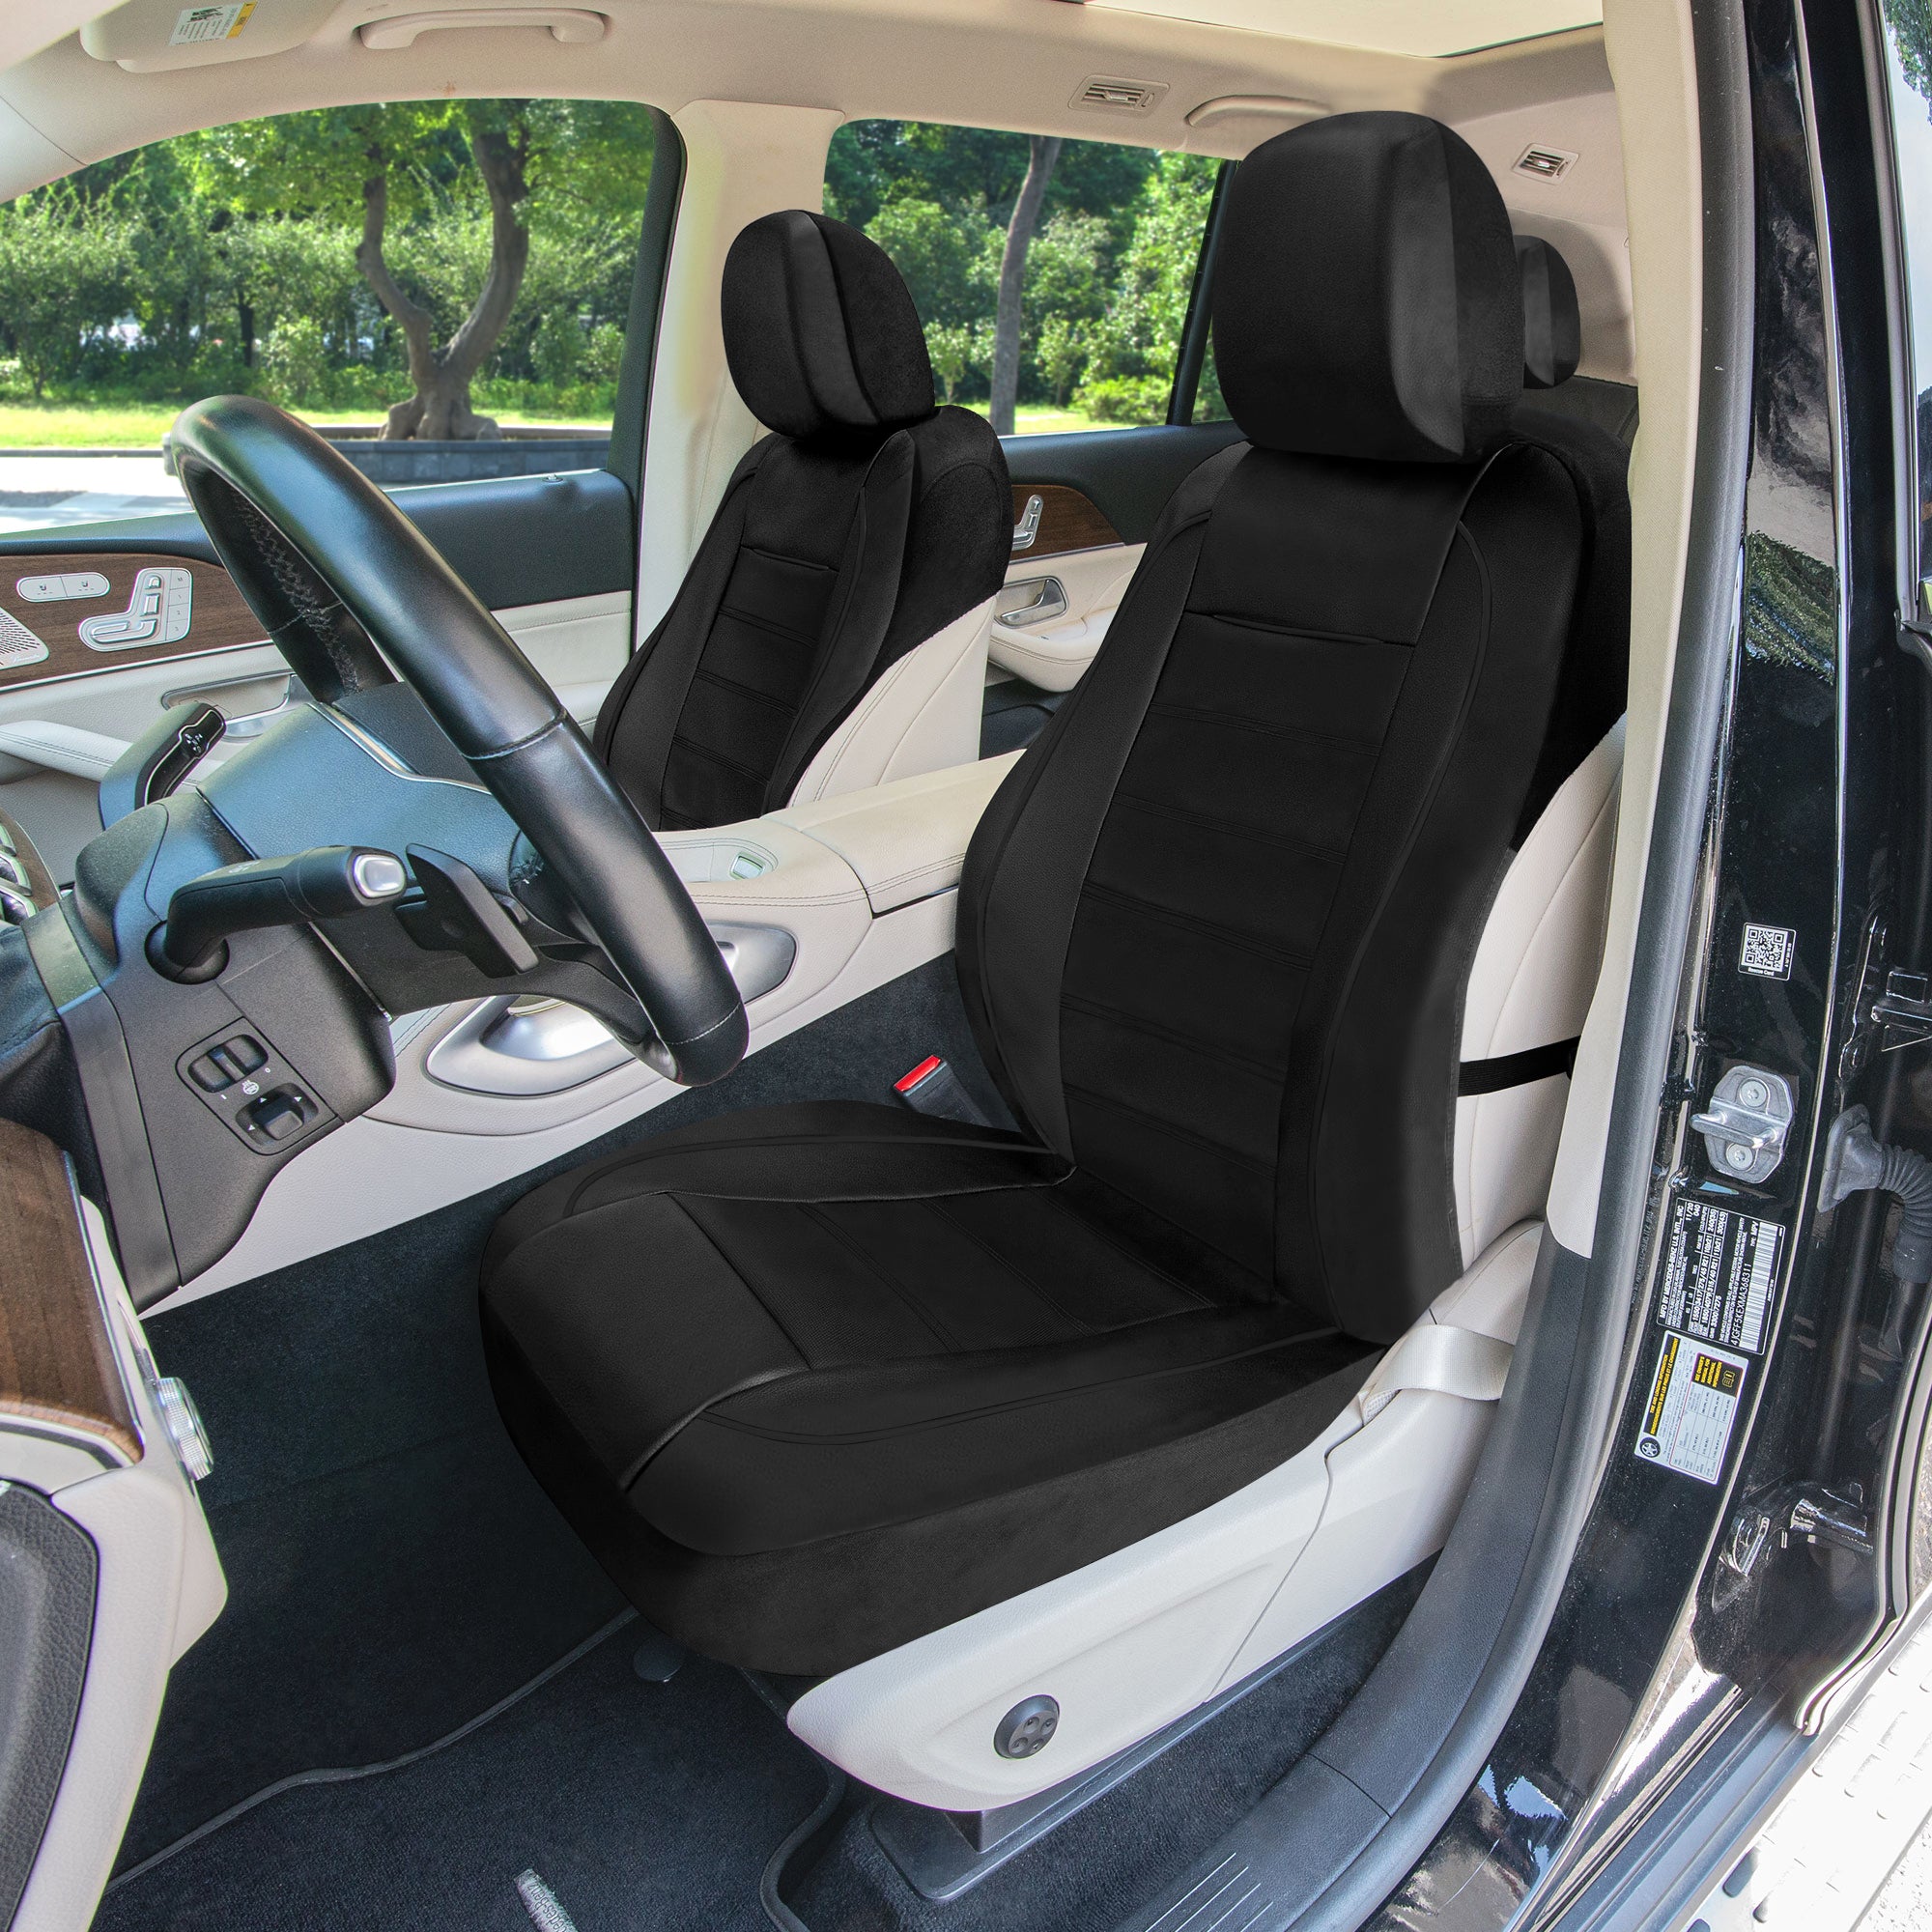 Premier Leatherette Seat Covers - Full Set - Black